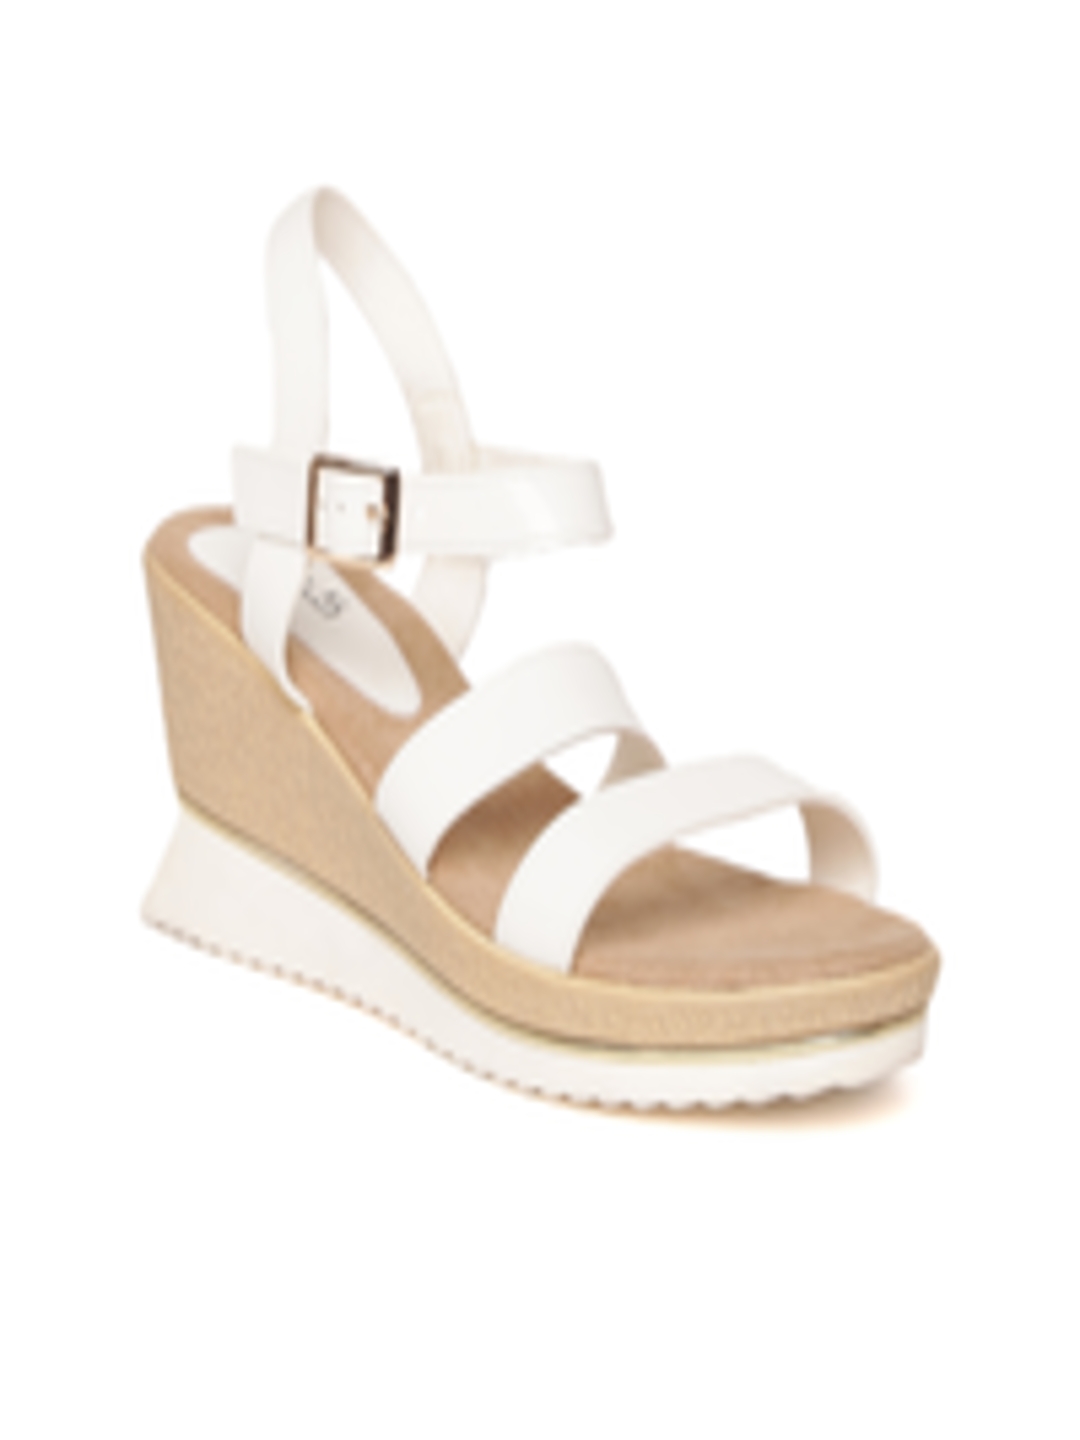 Buy Inc 5 Women White Solid Sandals - Heels for Women 2169936 | Myntra